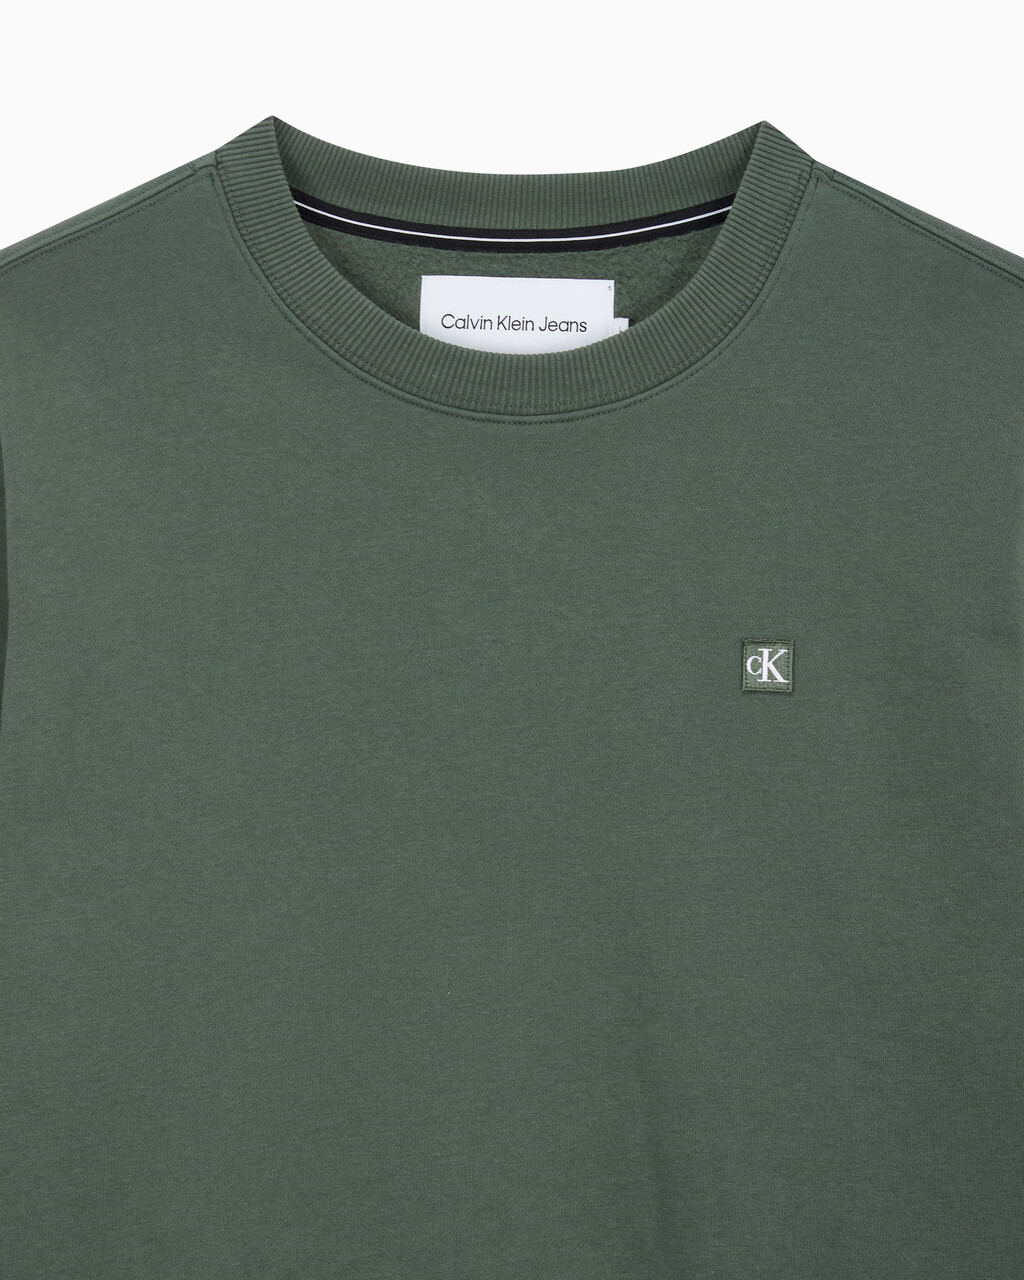 Buy 남성 레귤러핏 CK 뱃지 로고 기모 스웨트셔츠 in color KHAKI